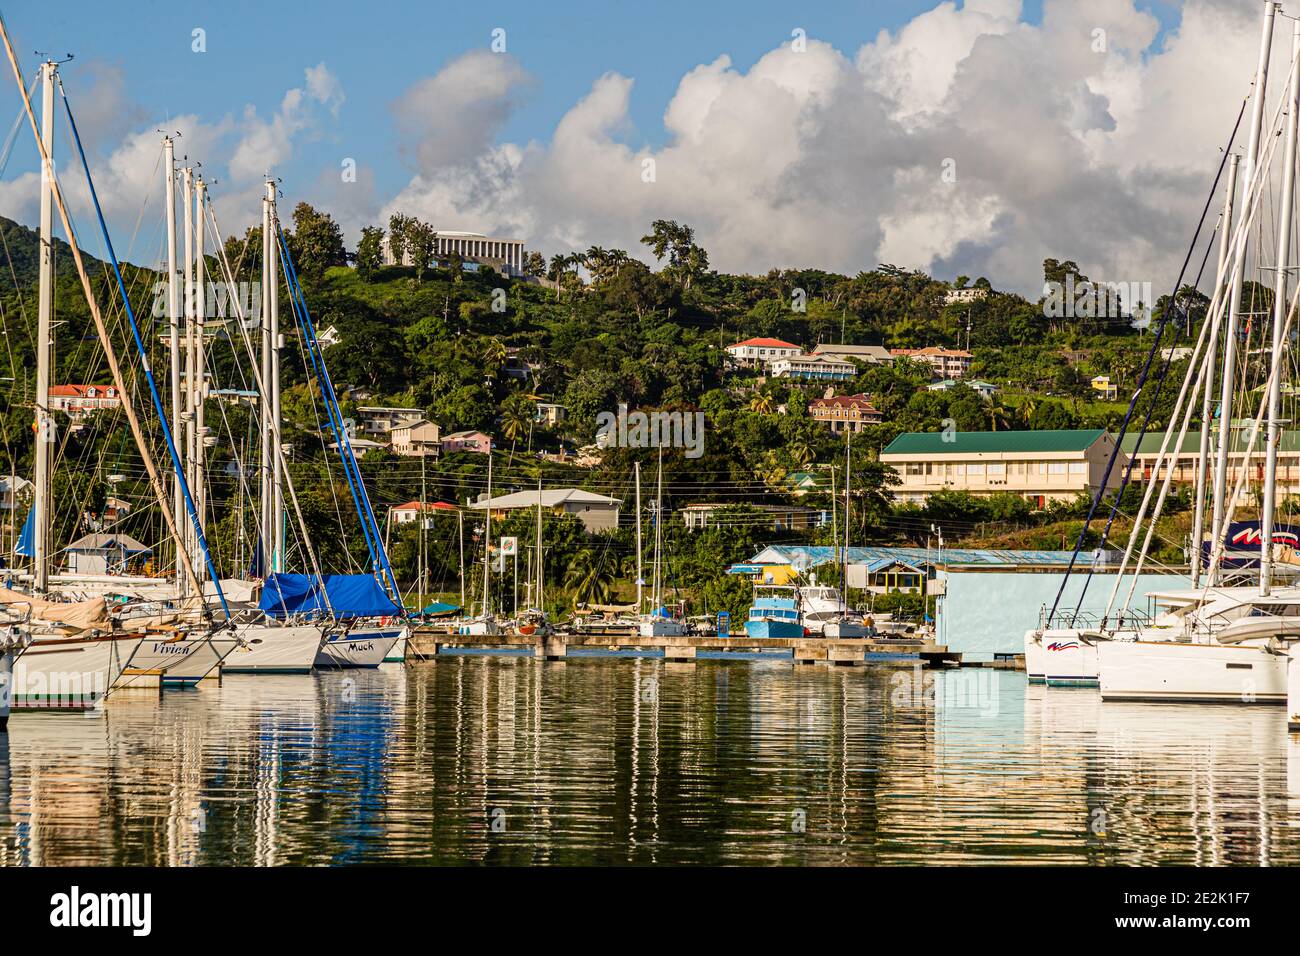 St. George’s, Capital of Grenada Stock Photo